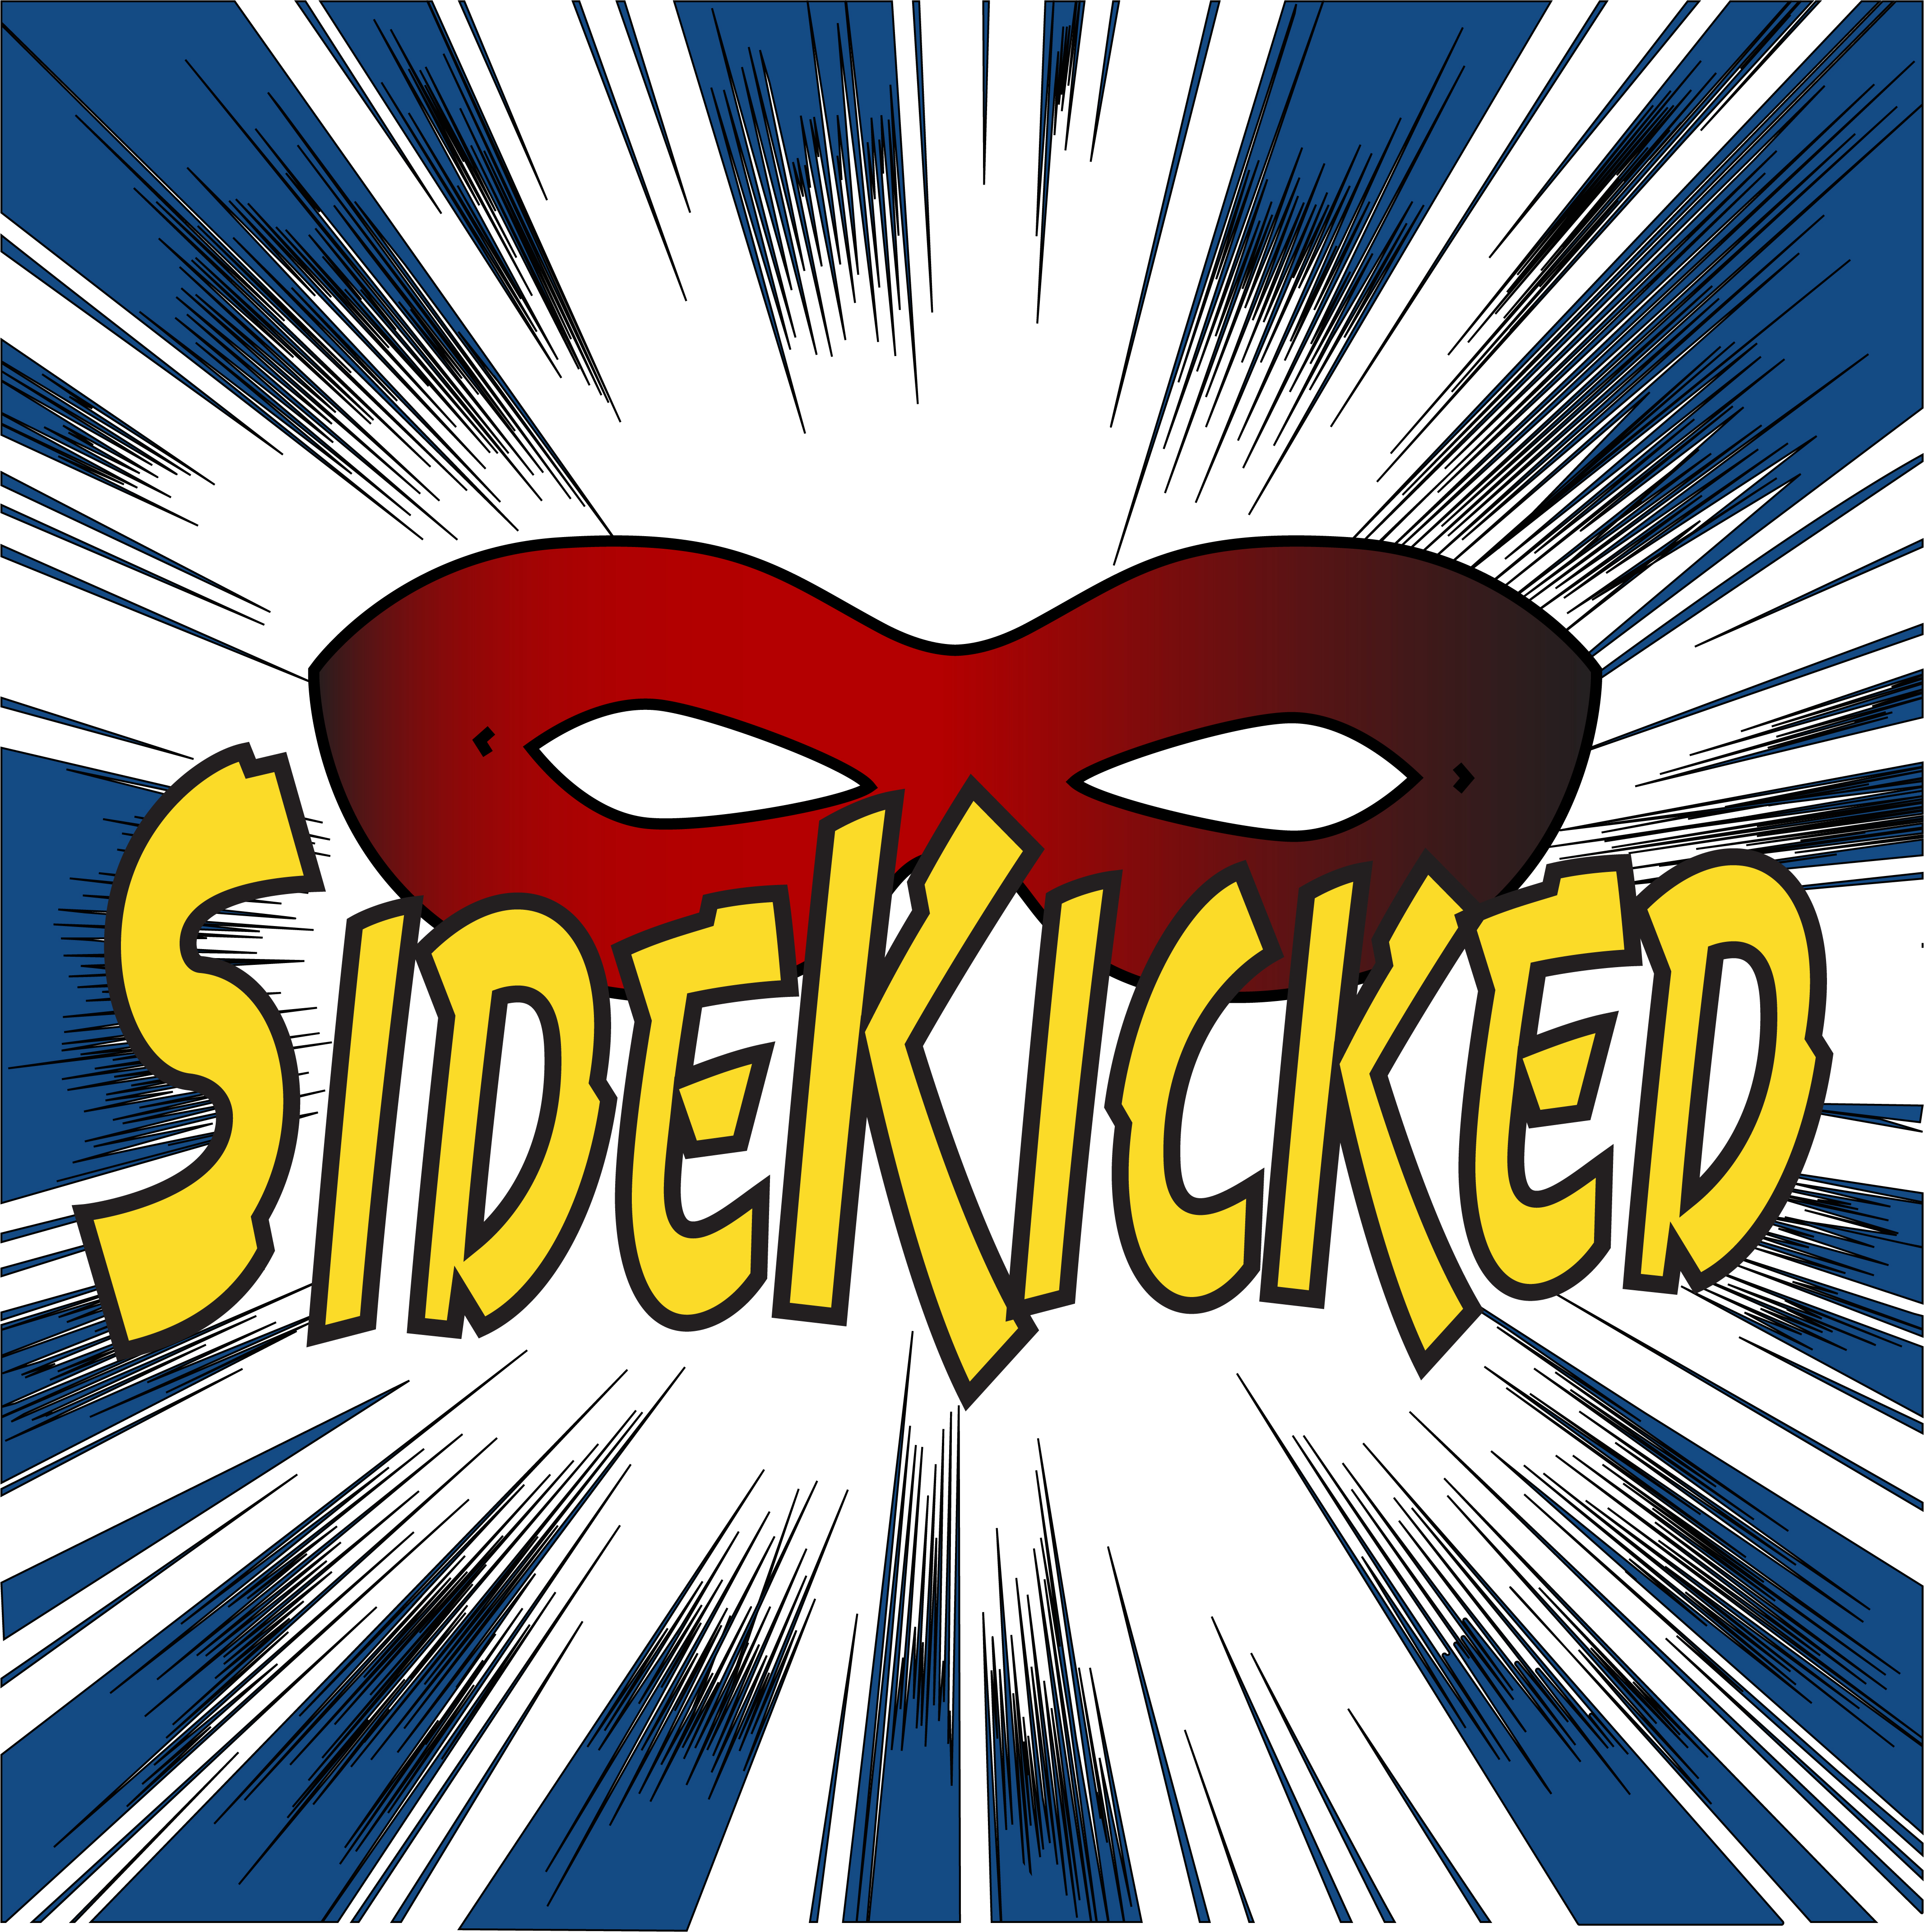 SideKicked!